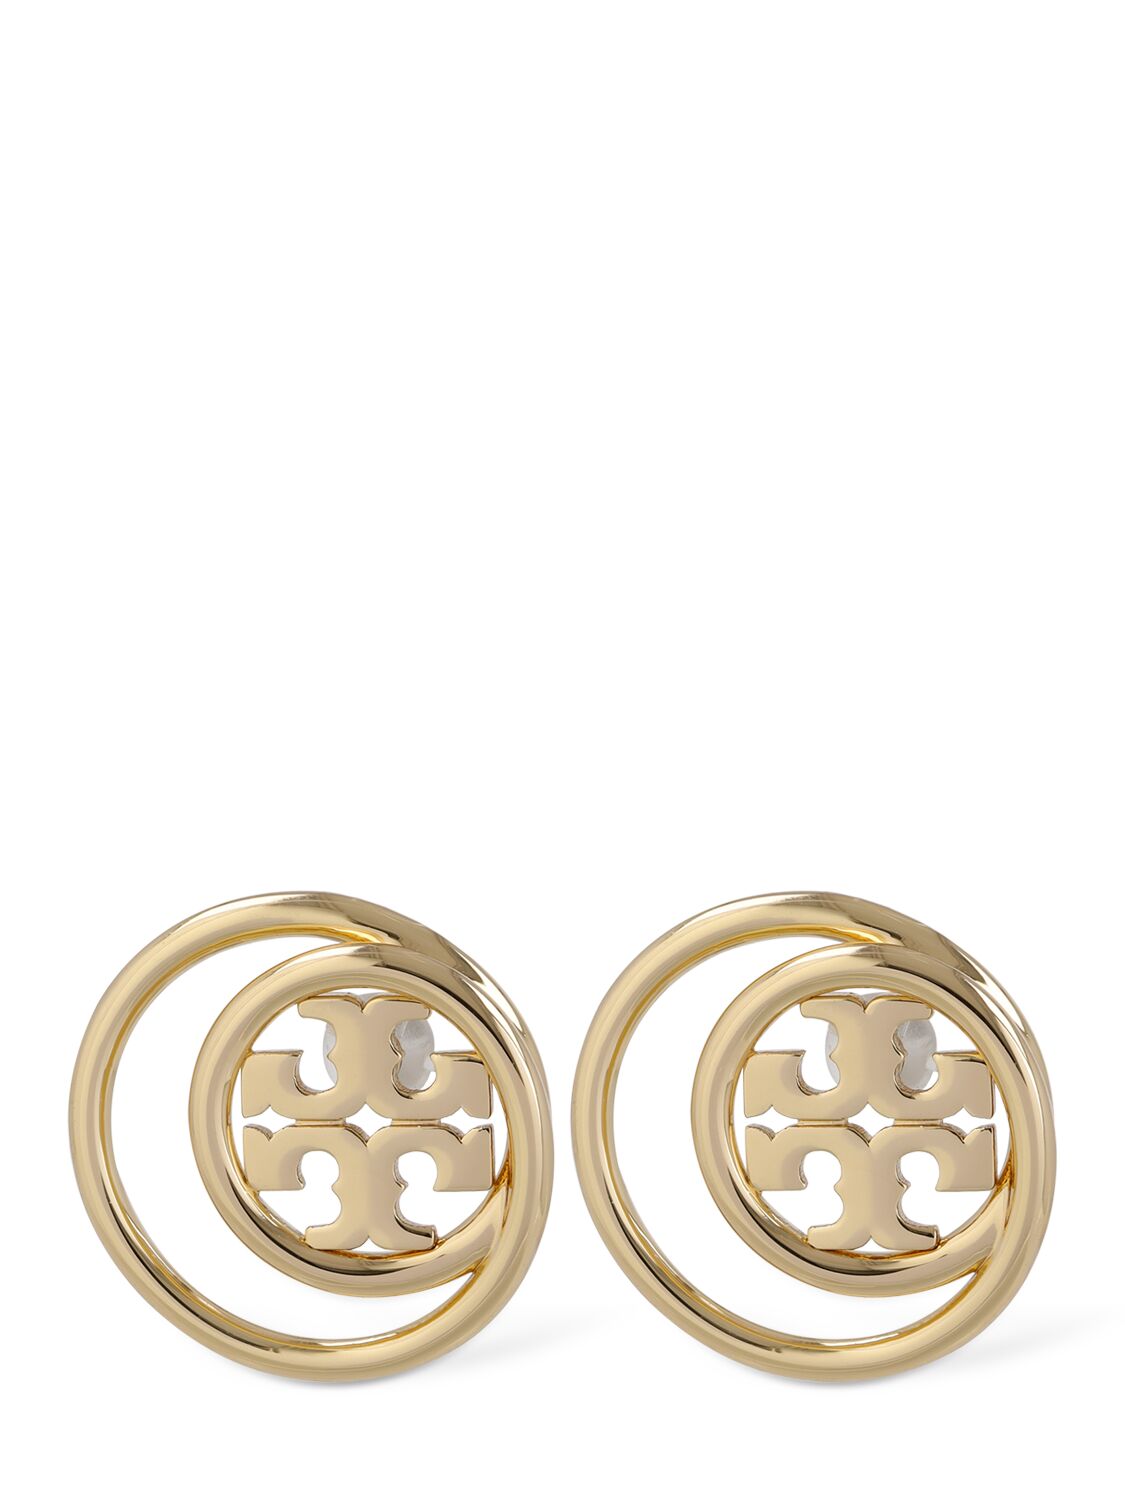 Tory Burch Miller Double Ring Stud Earrings In Gold